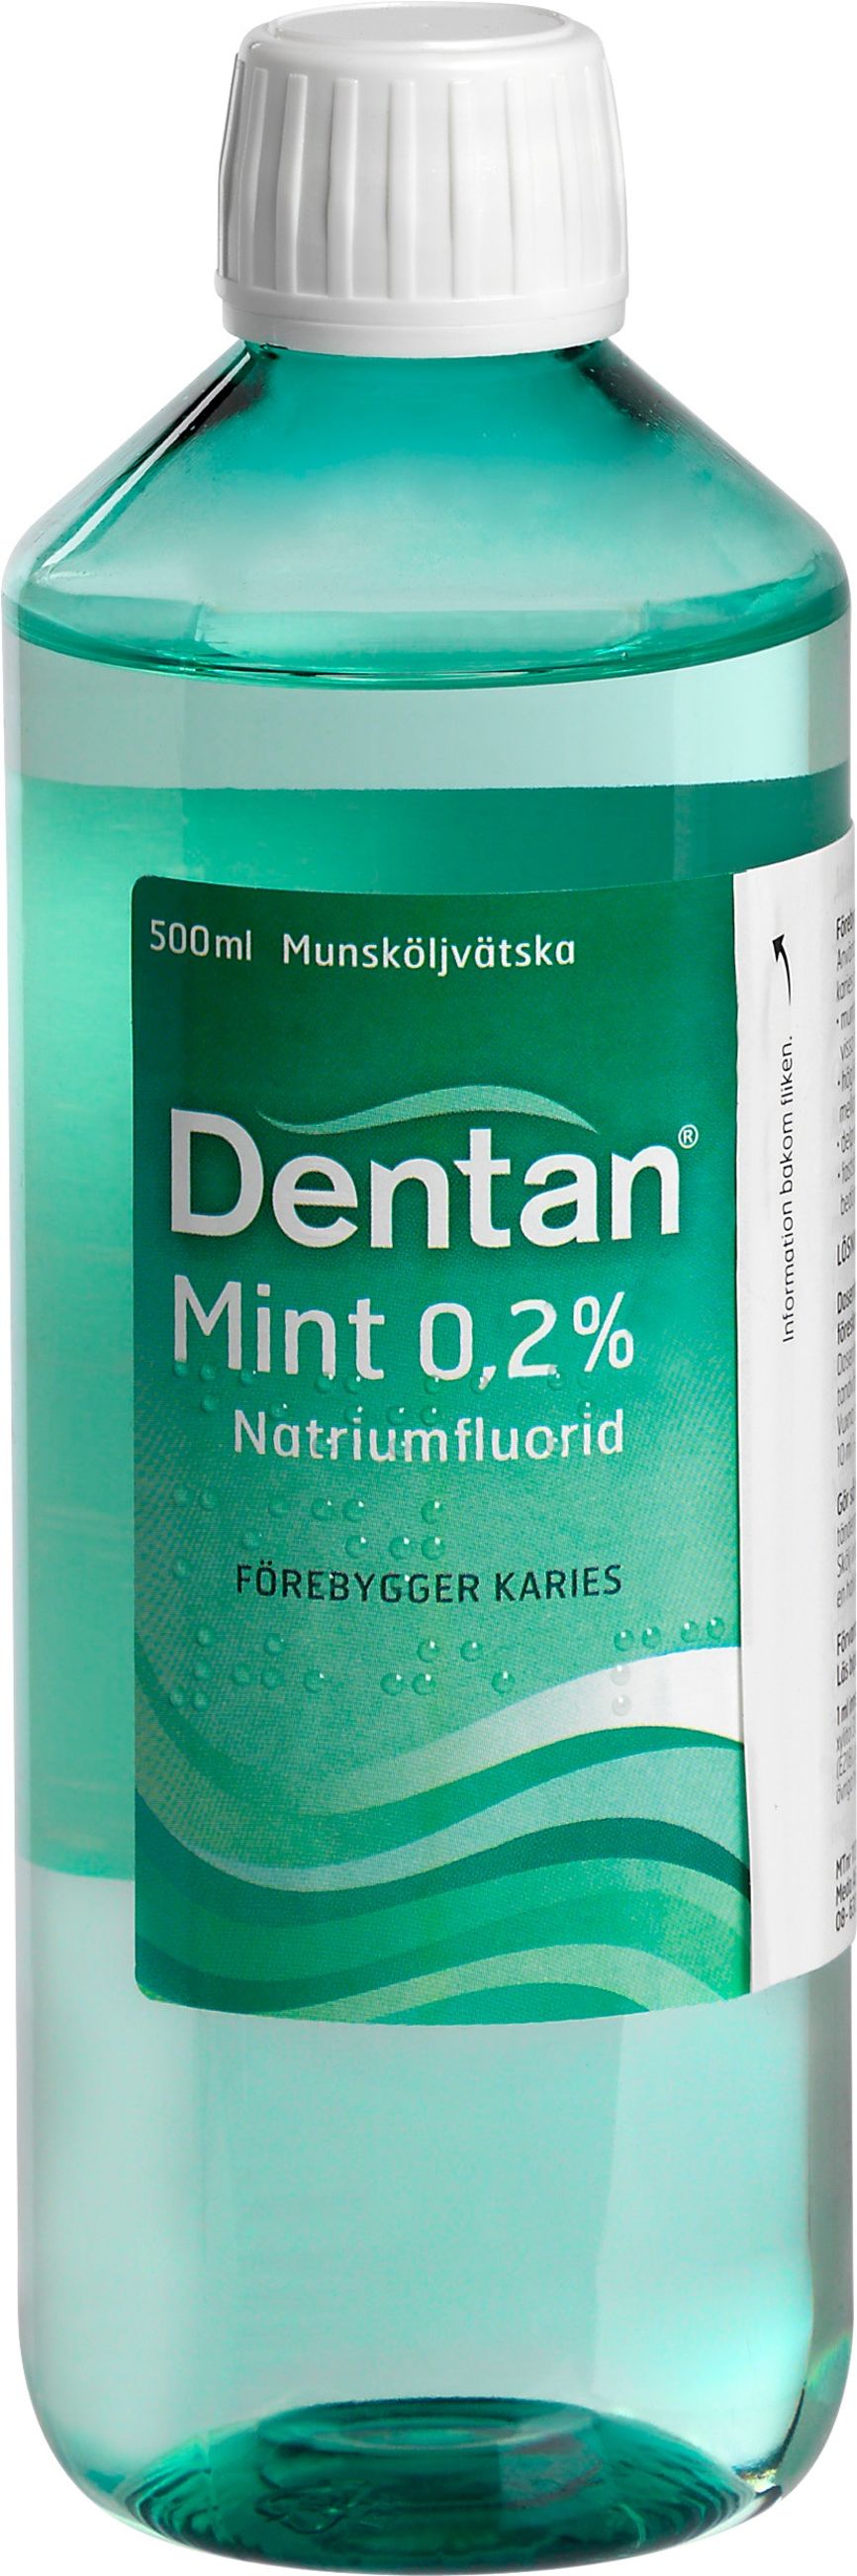 Dentan Mint munskölj 0,2%, 500ml